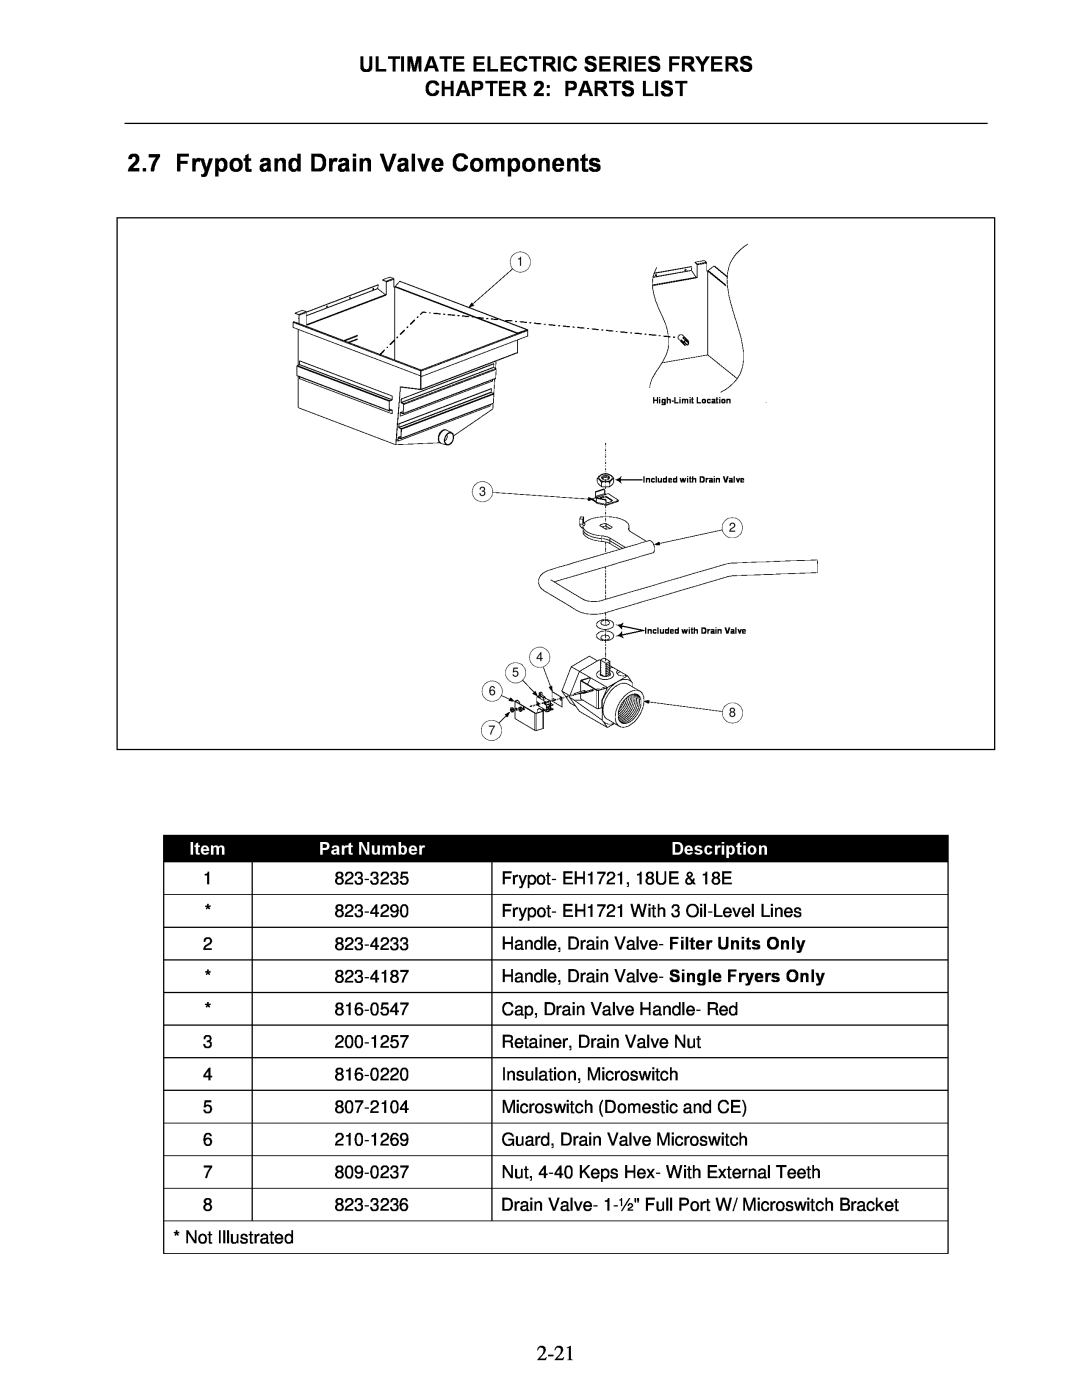 Frymaster Frypot and Drain Valve Components, Ultimate Electric Series Fryers, Parts List, Part Number, Description 